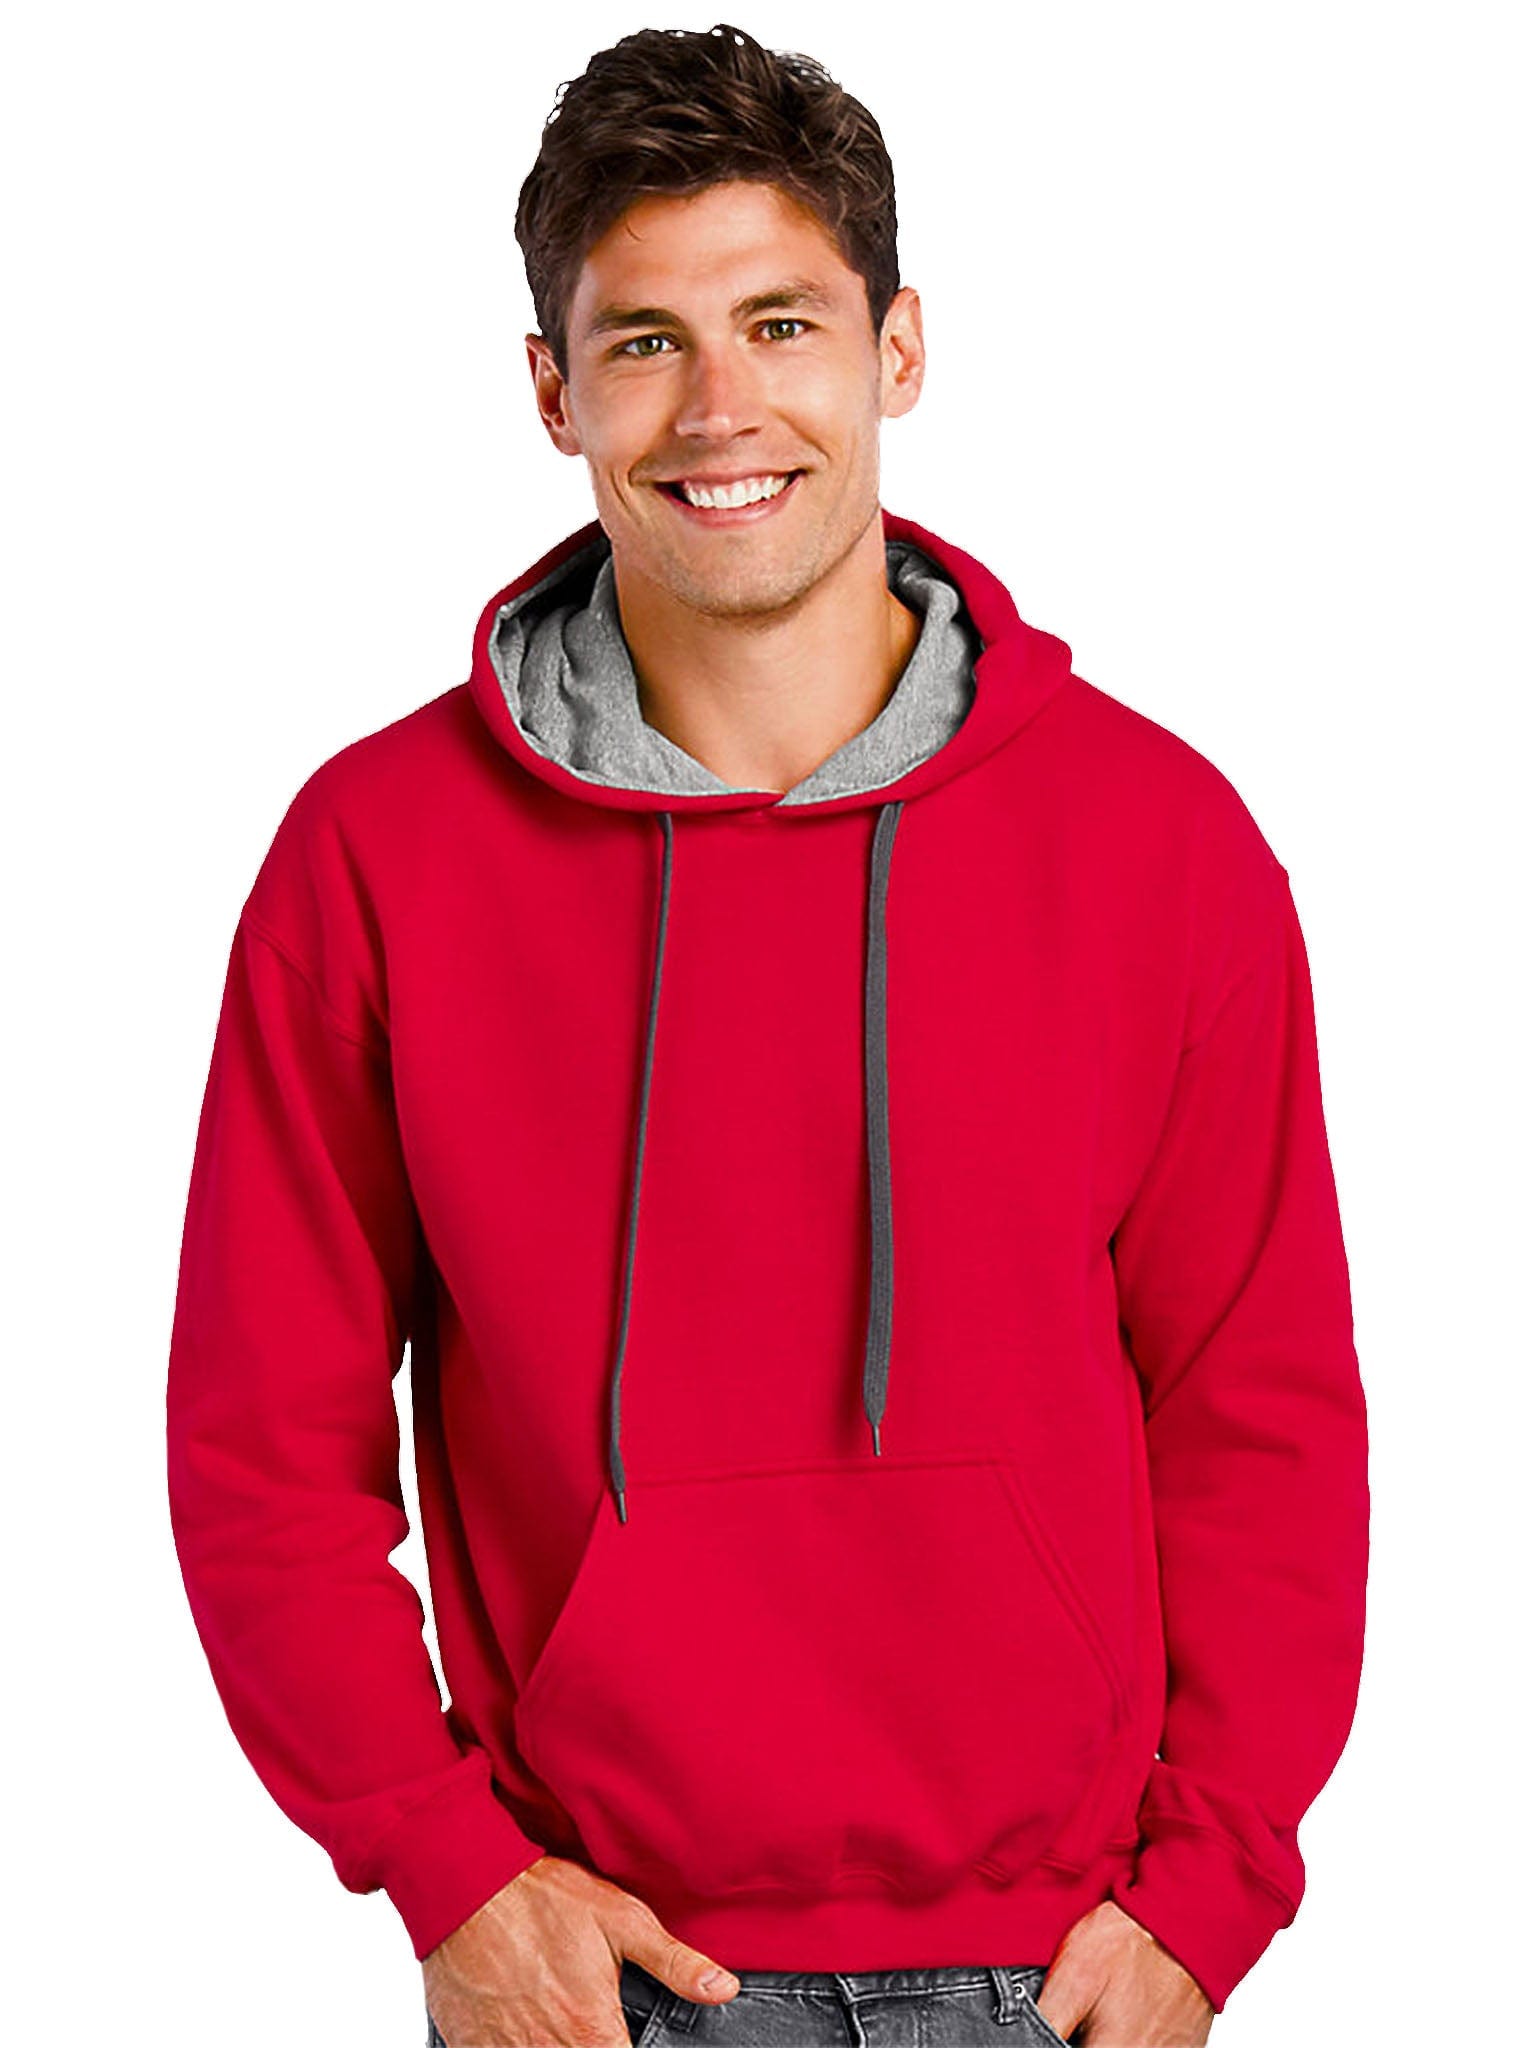 Cotton hooded sweatshirt with contrast logo